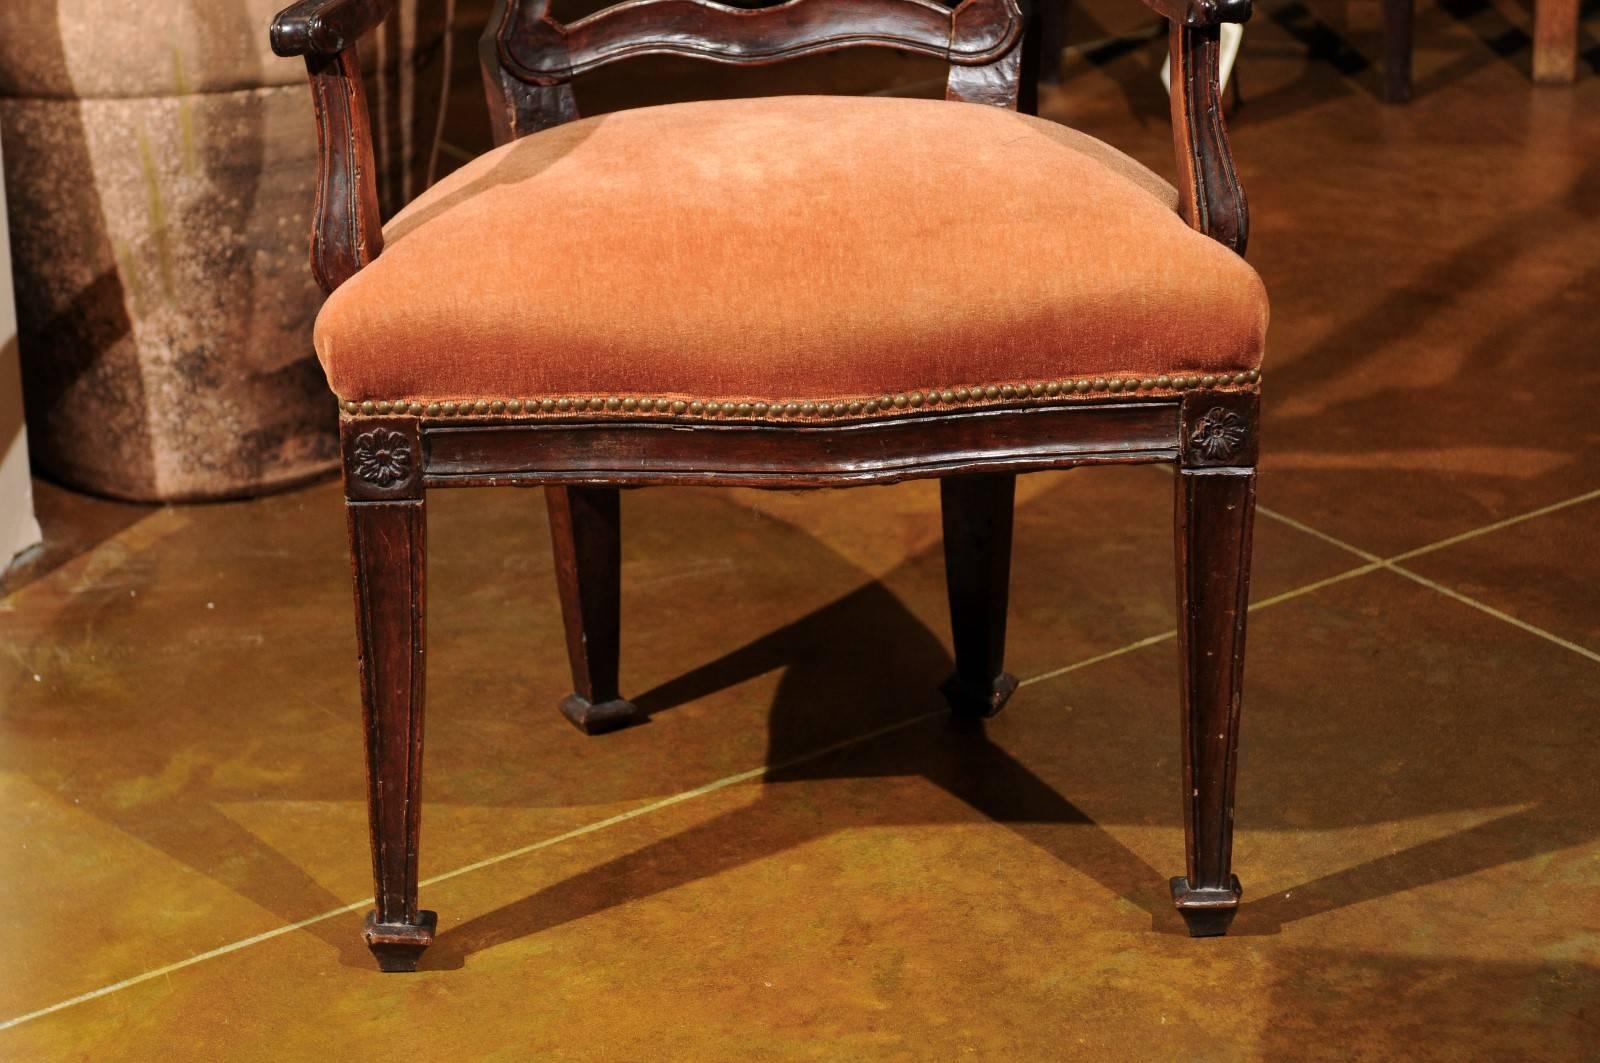 Transitional Rococo / Neoclassical Armchair in Walnut, Italy, circa 1780 In Good Condition For Sale In Atlanta, GA